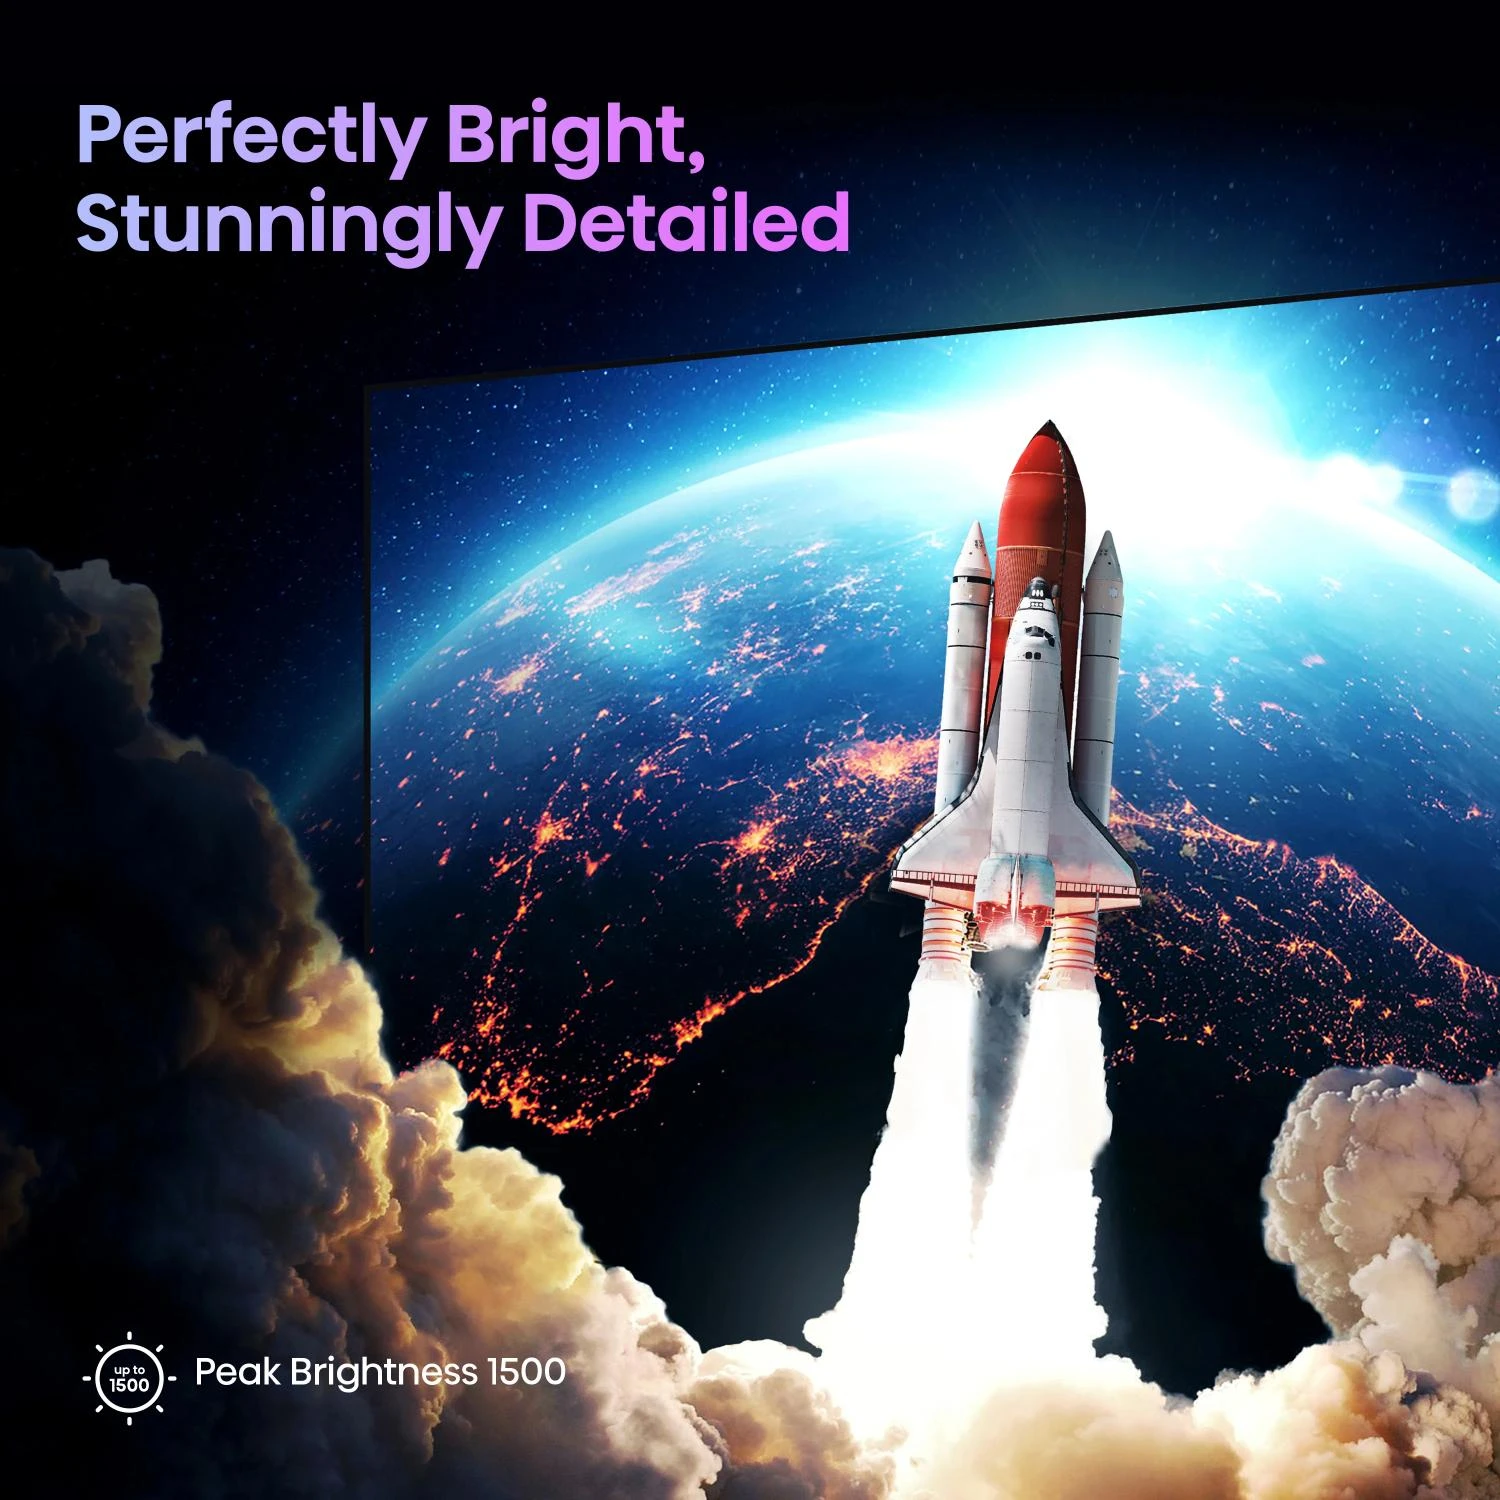 Hisense 85 U8 Series Mini-LED ULED 4K Google TV (85U8K)